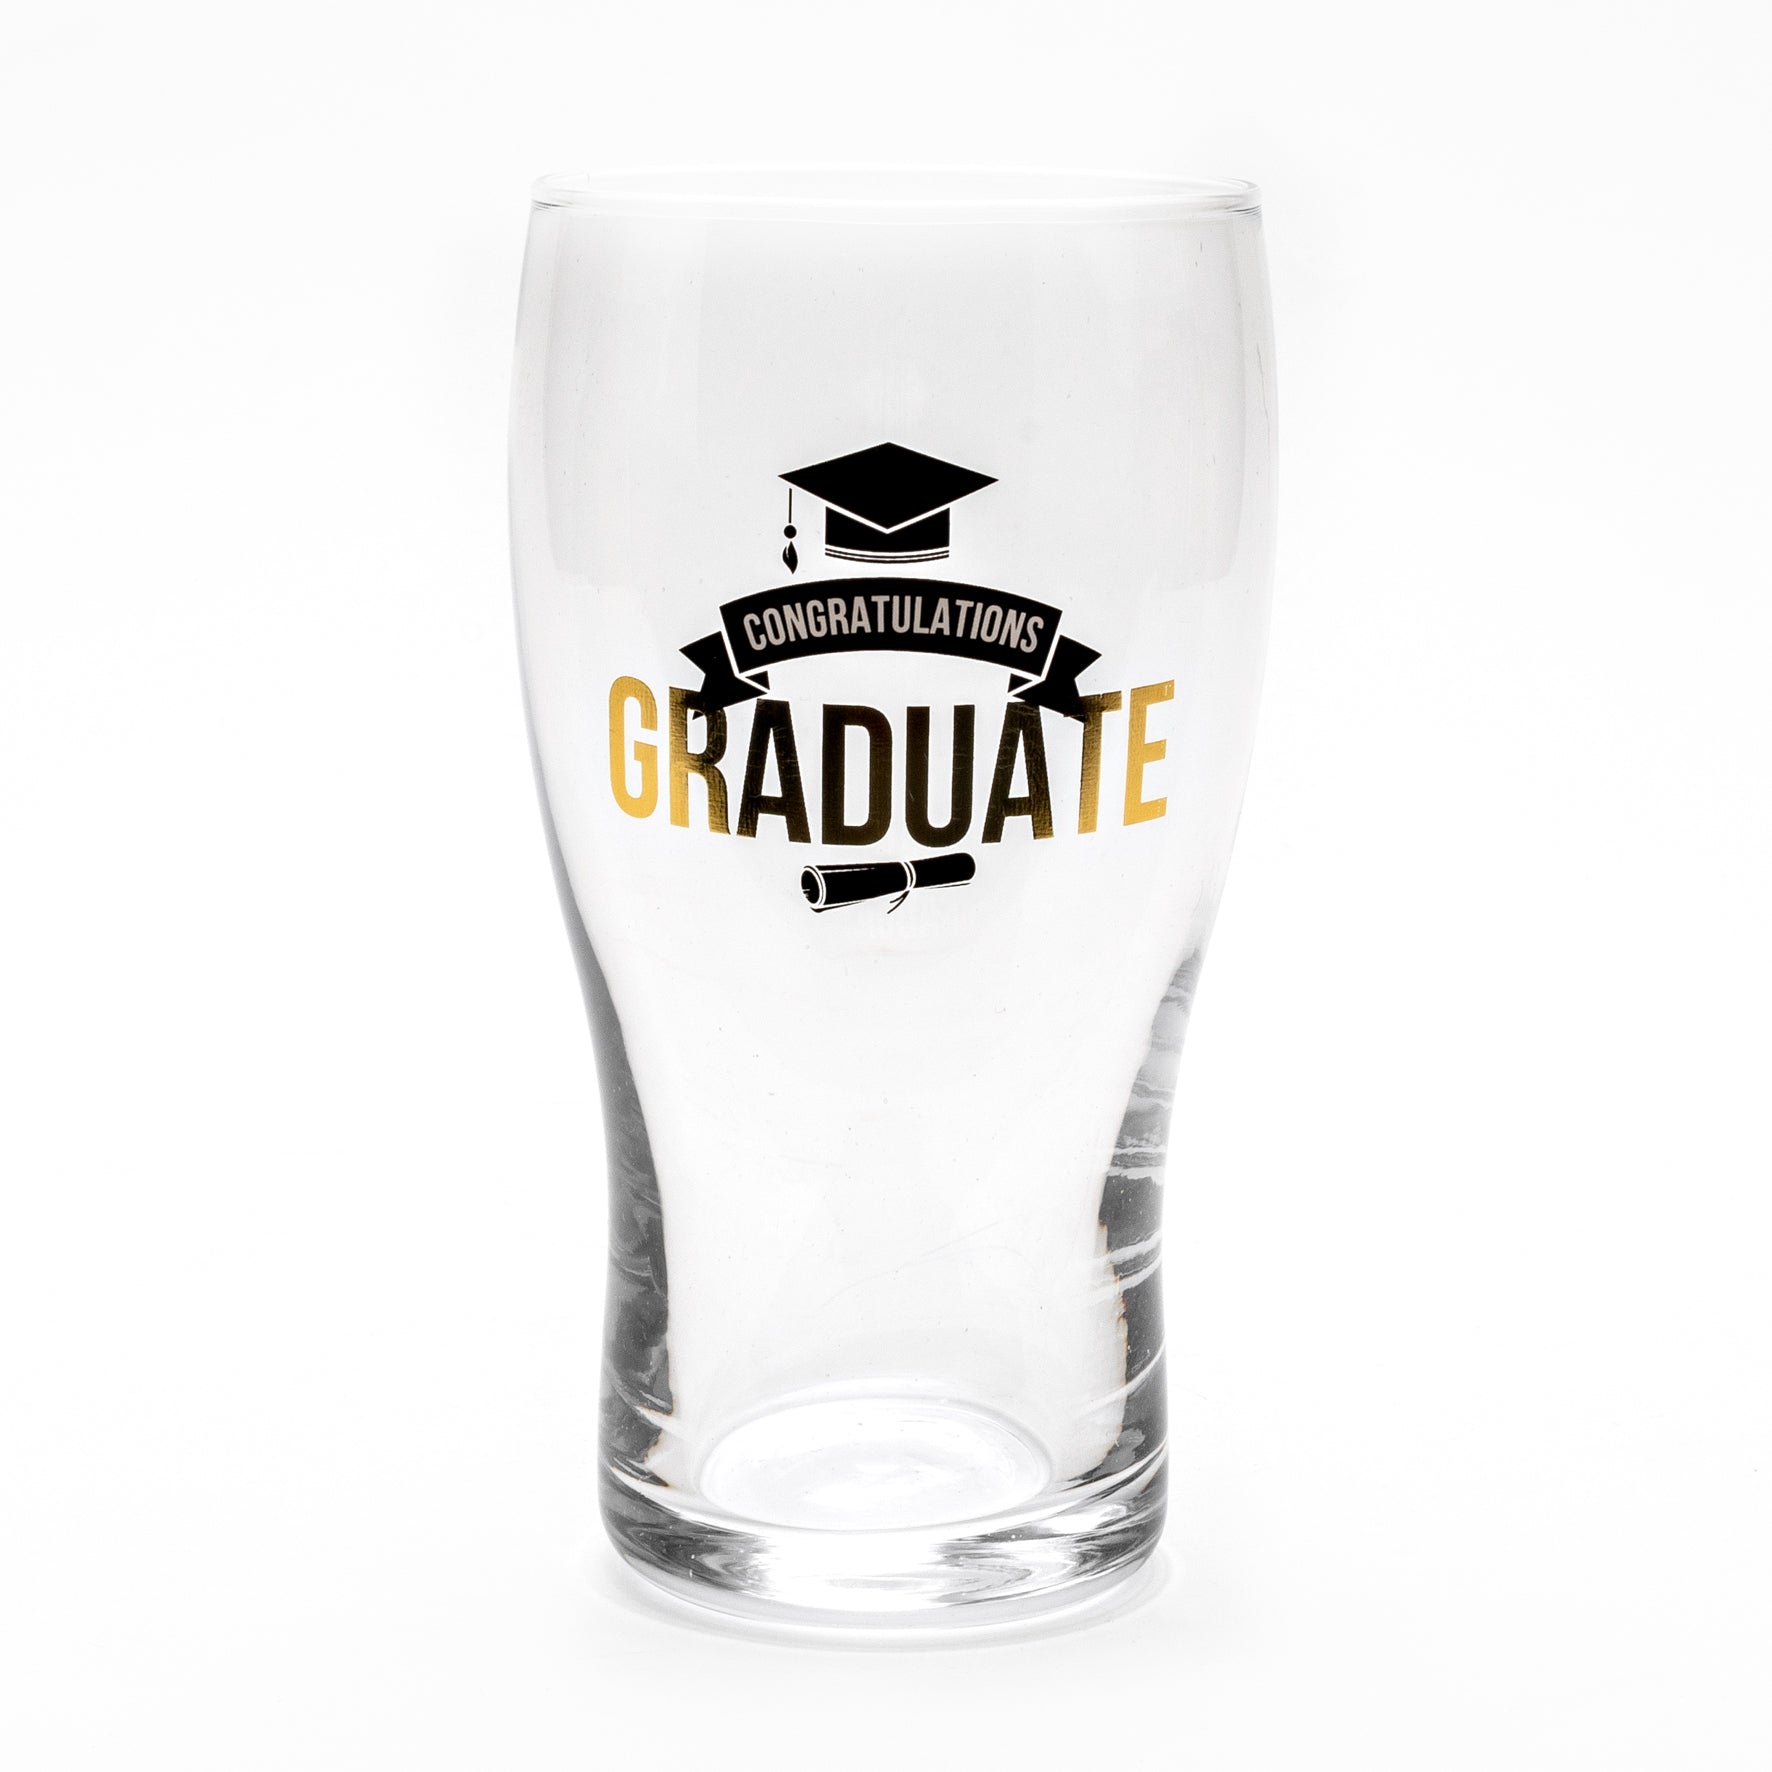 Graduation Beer Glass - Congratulations Graduate